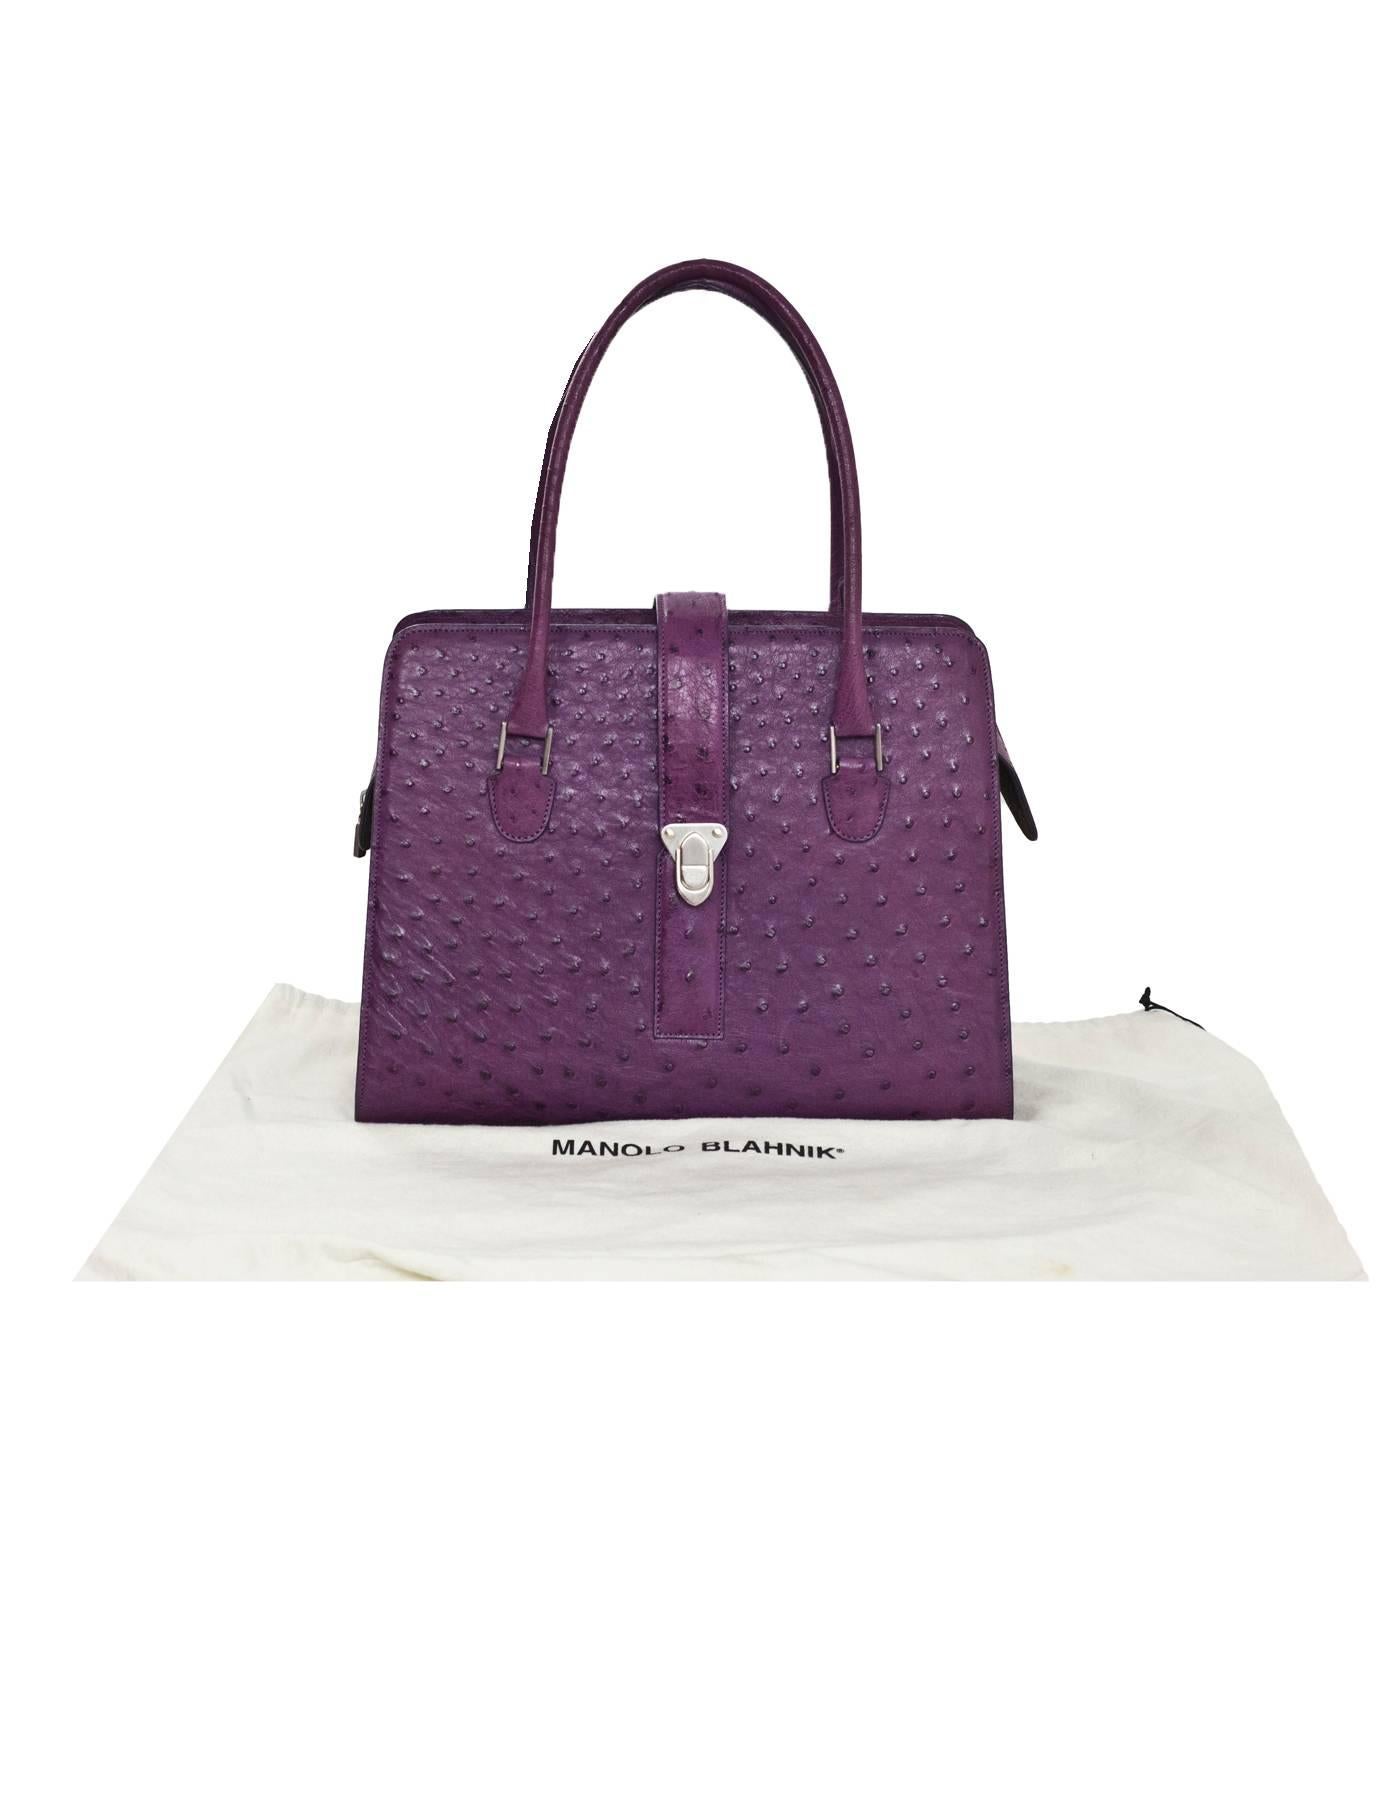 Manolo Blahnik Purple Ostrich Tote Bag with DB 6